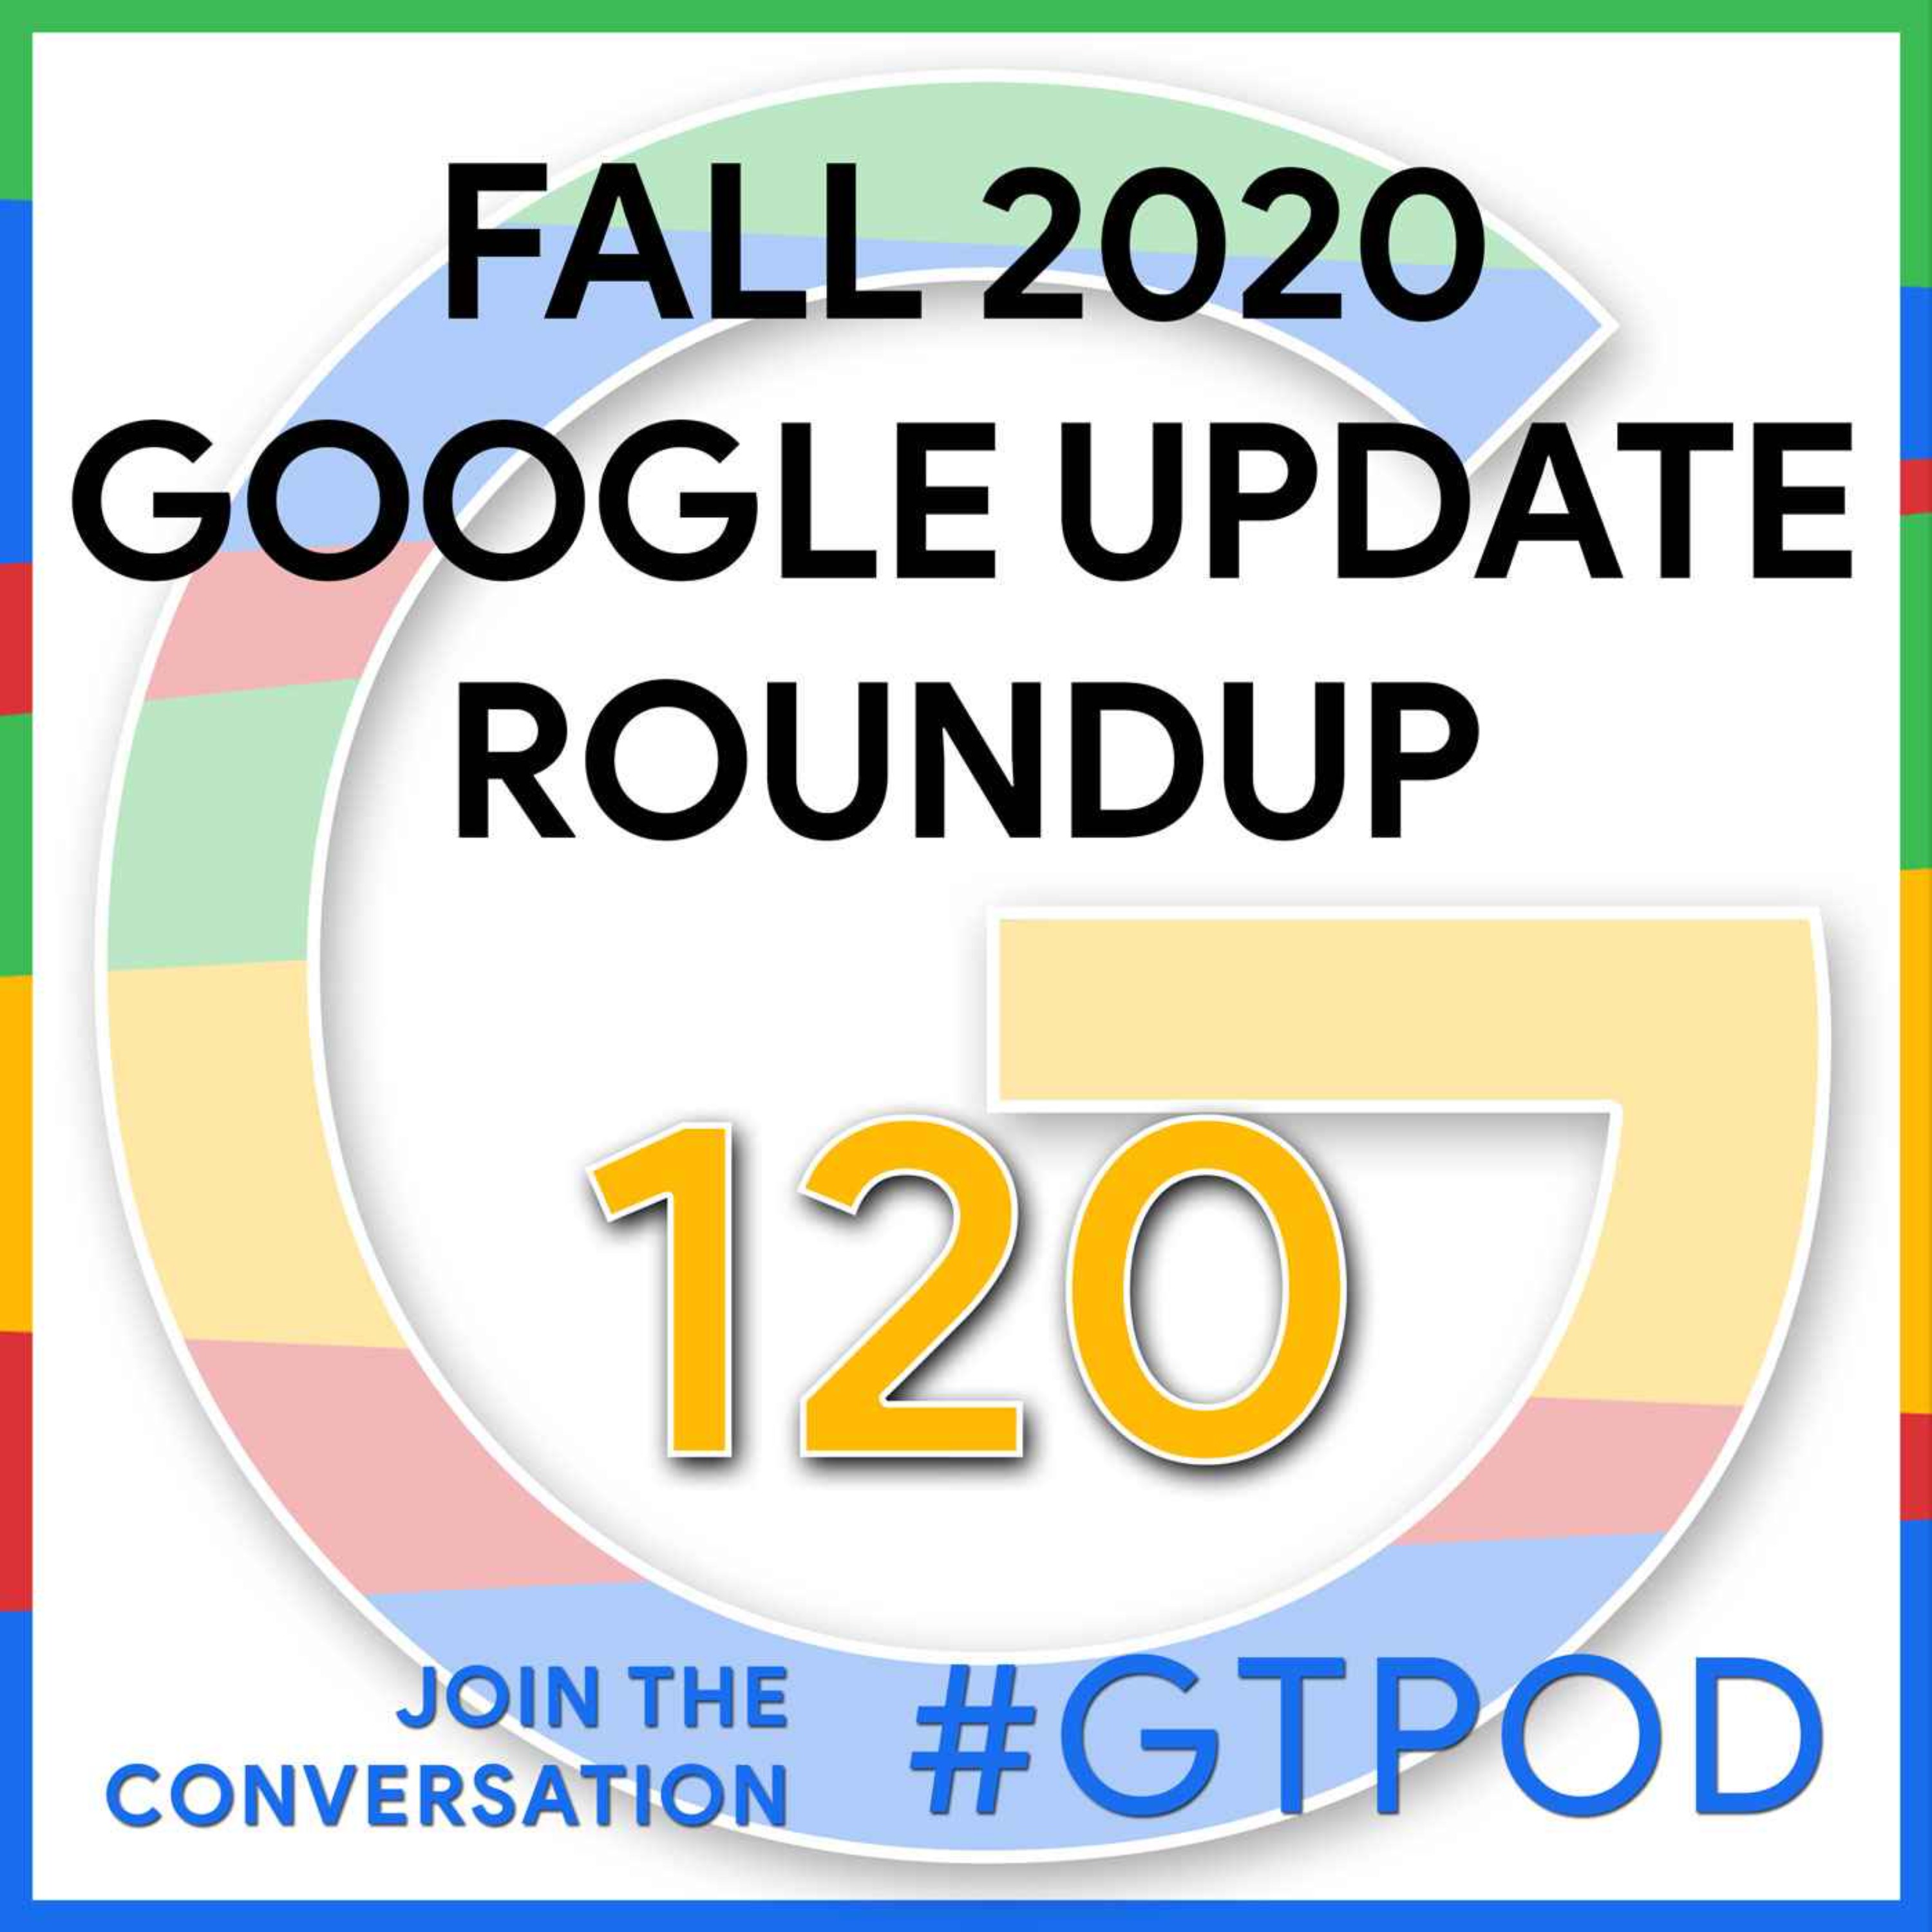 Fall 2020 Google Update Roundup - GTP120